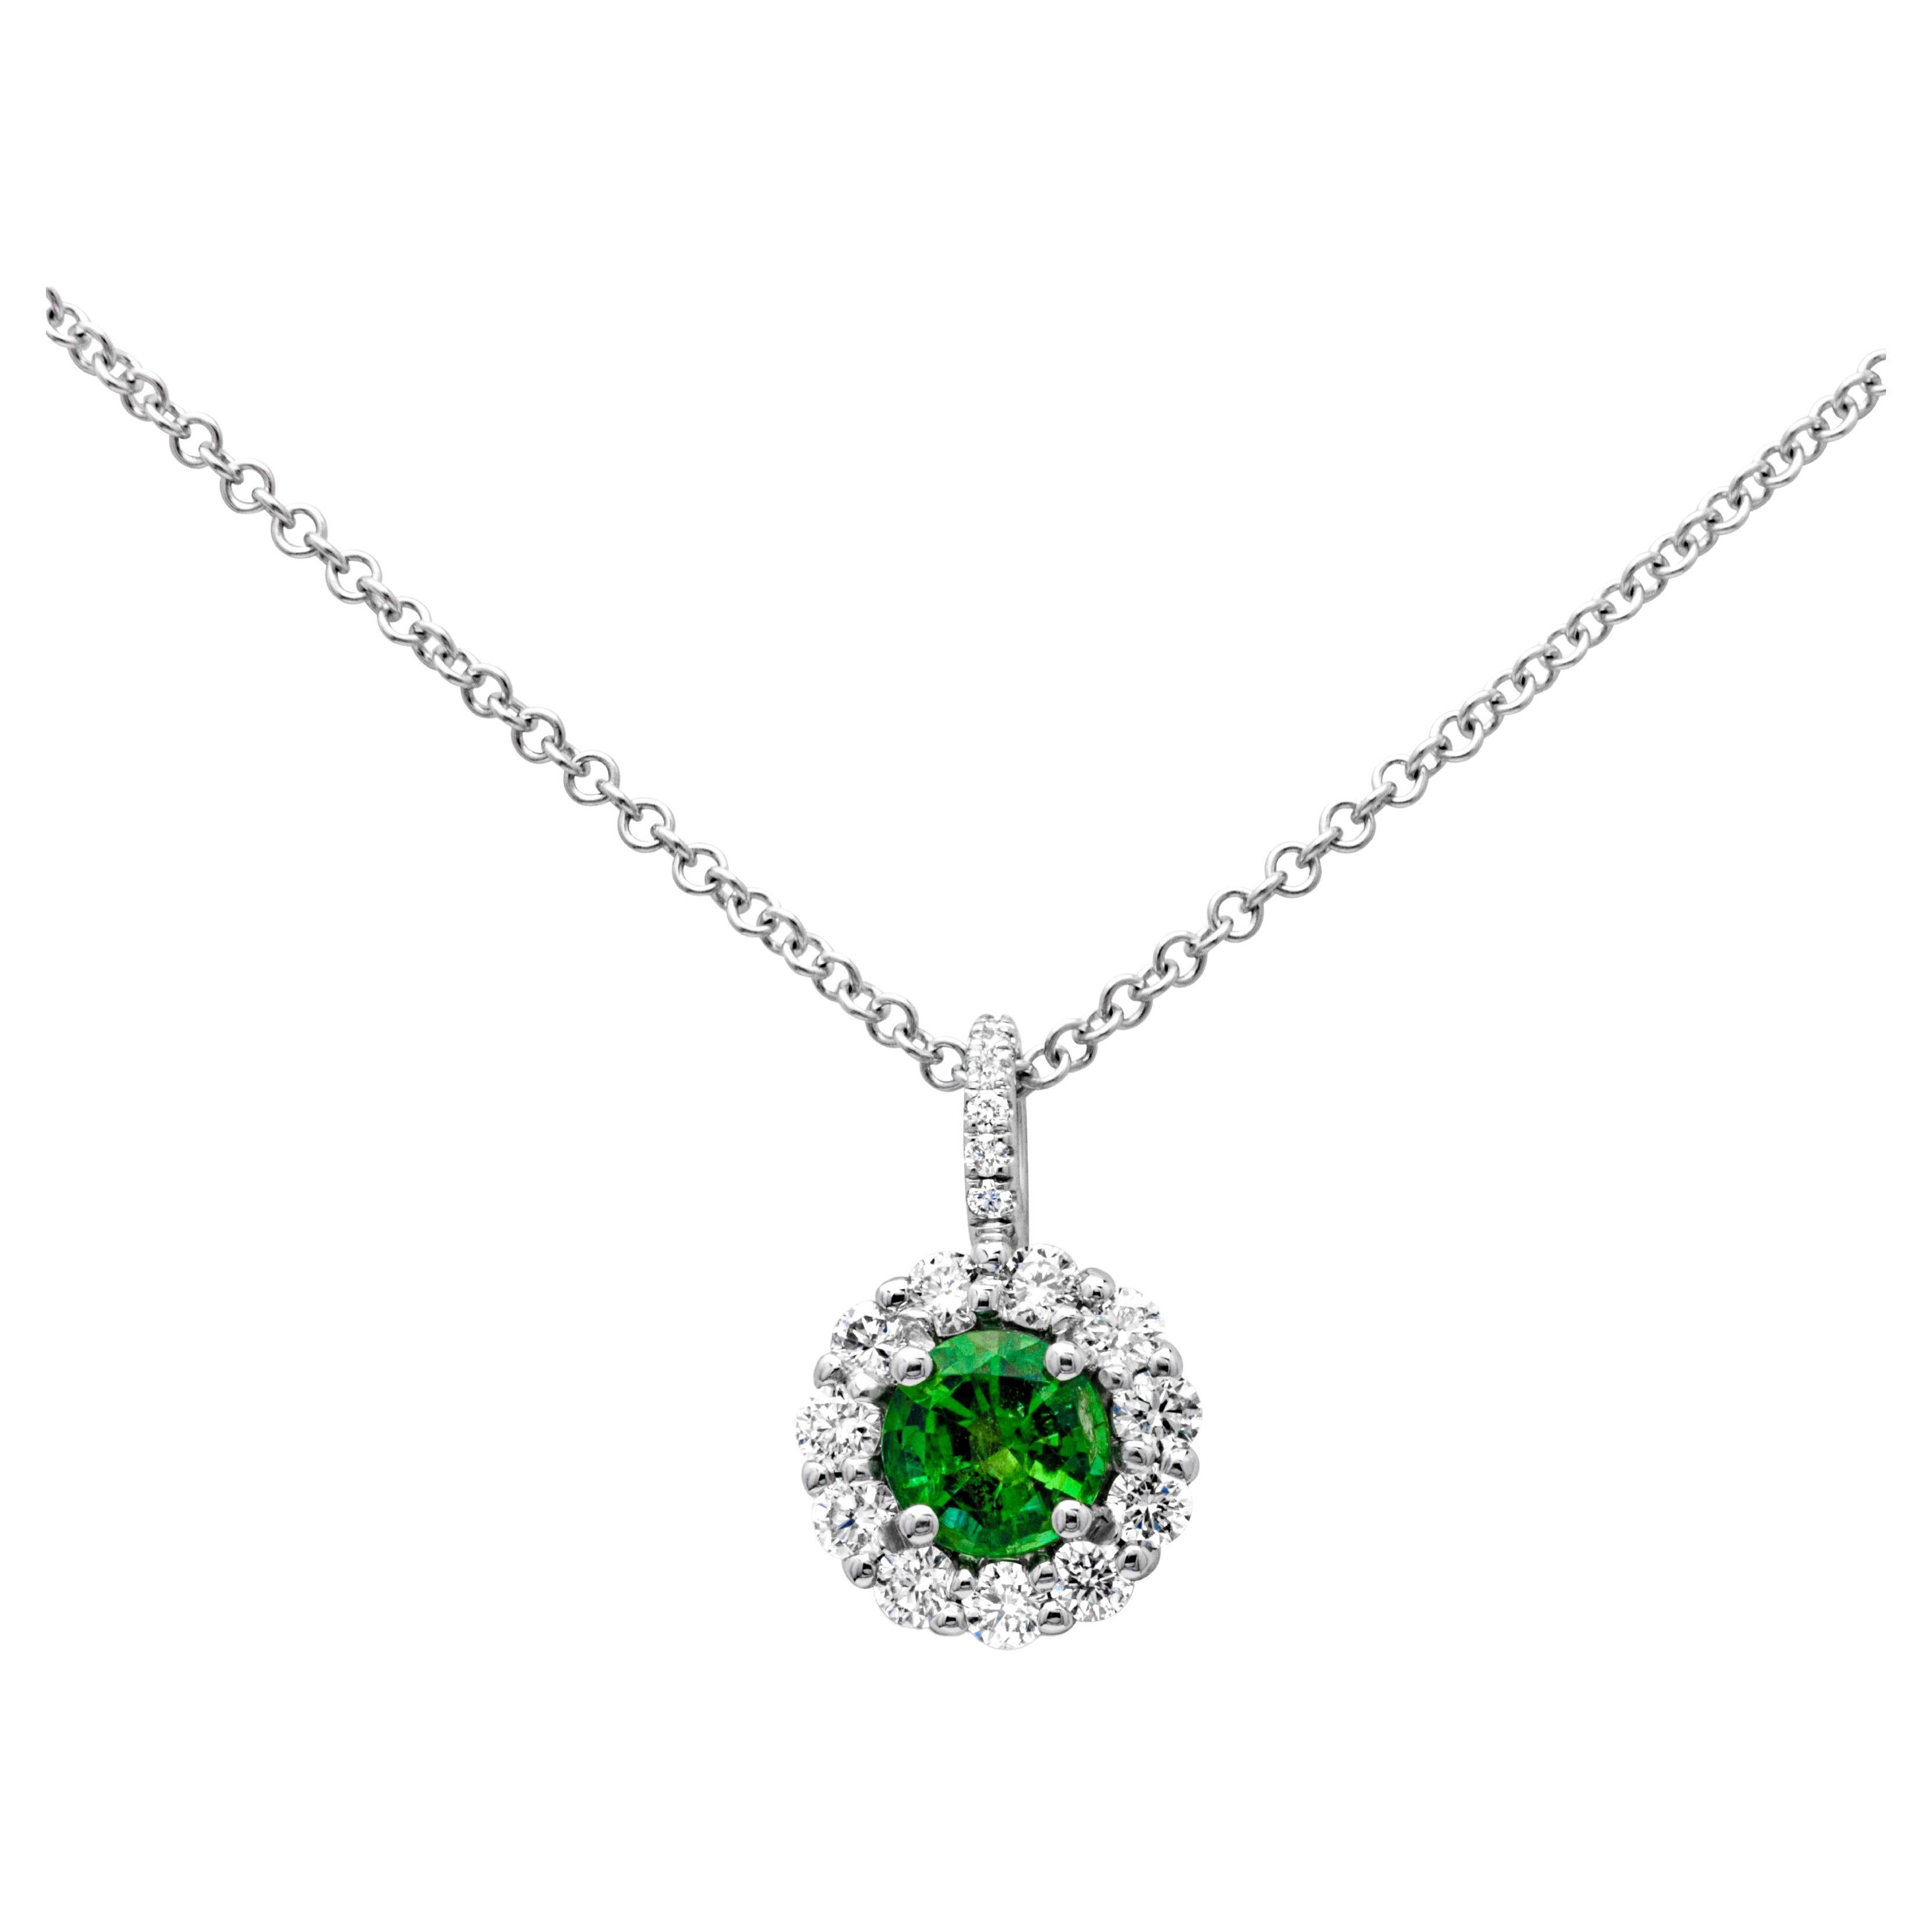 Roman Malakov 0,33 Karat runder grüner Smaragd mit Diamant-Halo-Anhänger Halskette